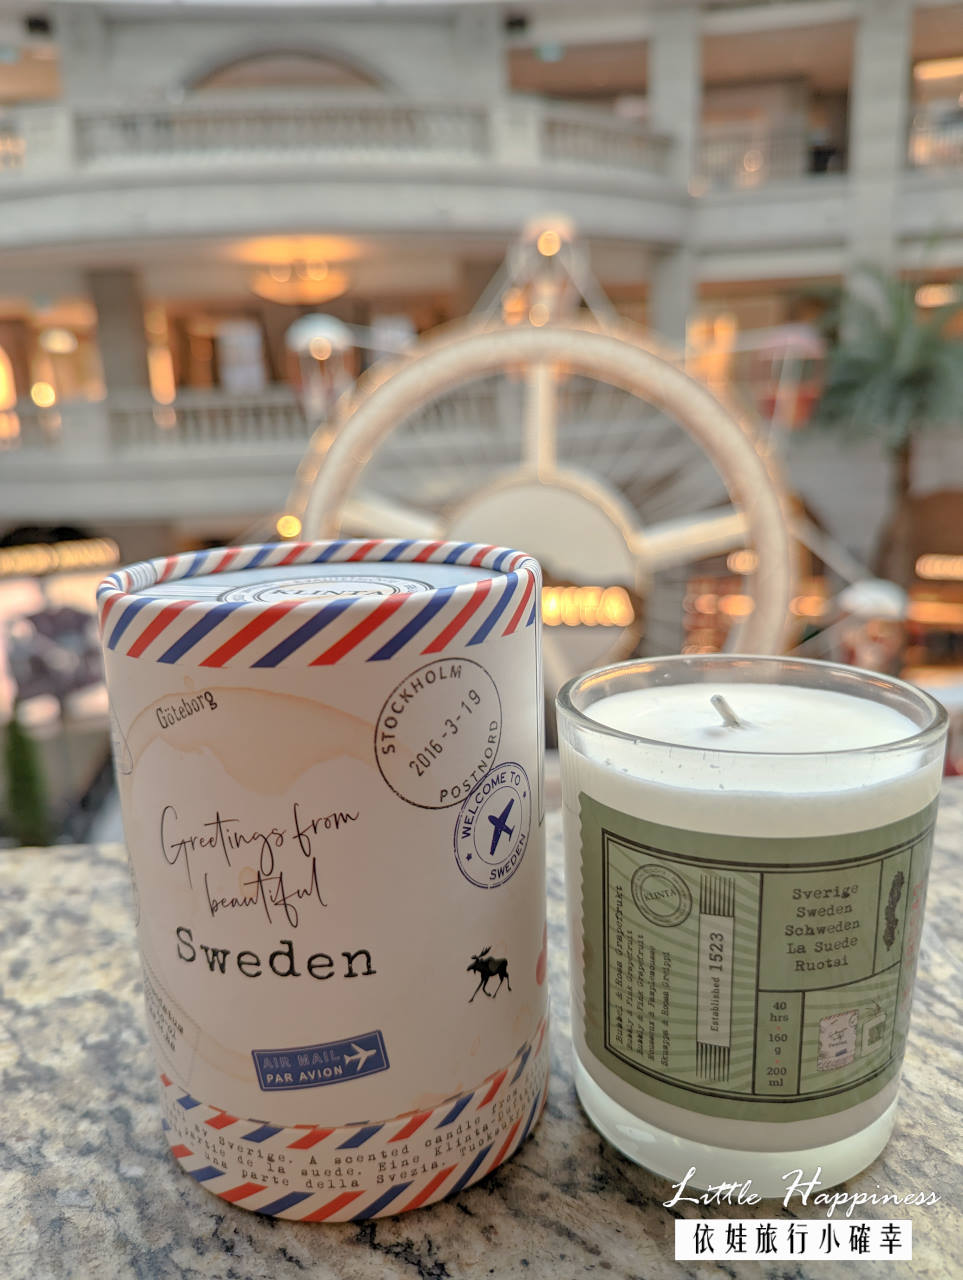 Klinta香氛按摩蠟燭讓你在家做SPA，傳遞瑞典頂級天然蠟燭的幸福感，木質調或香檳氣味都適合當作聖誕禮物